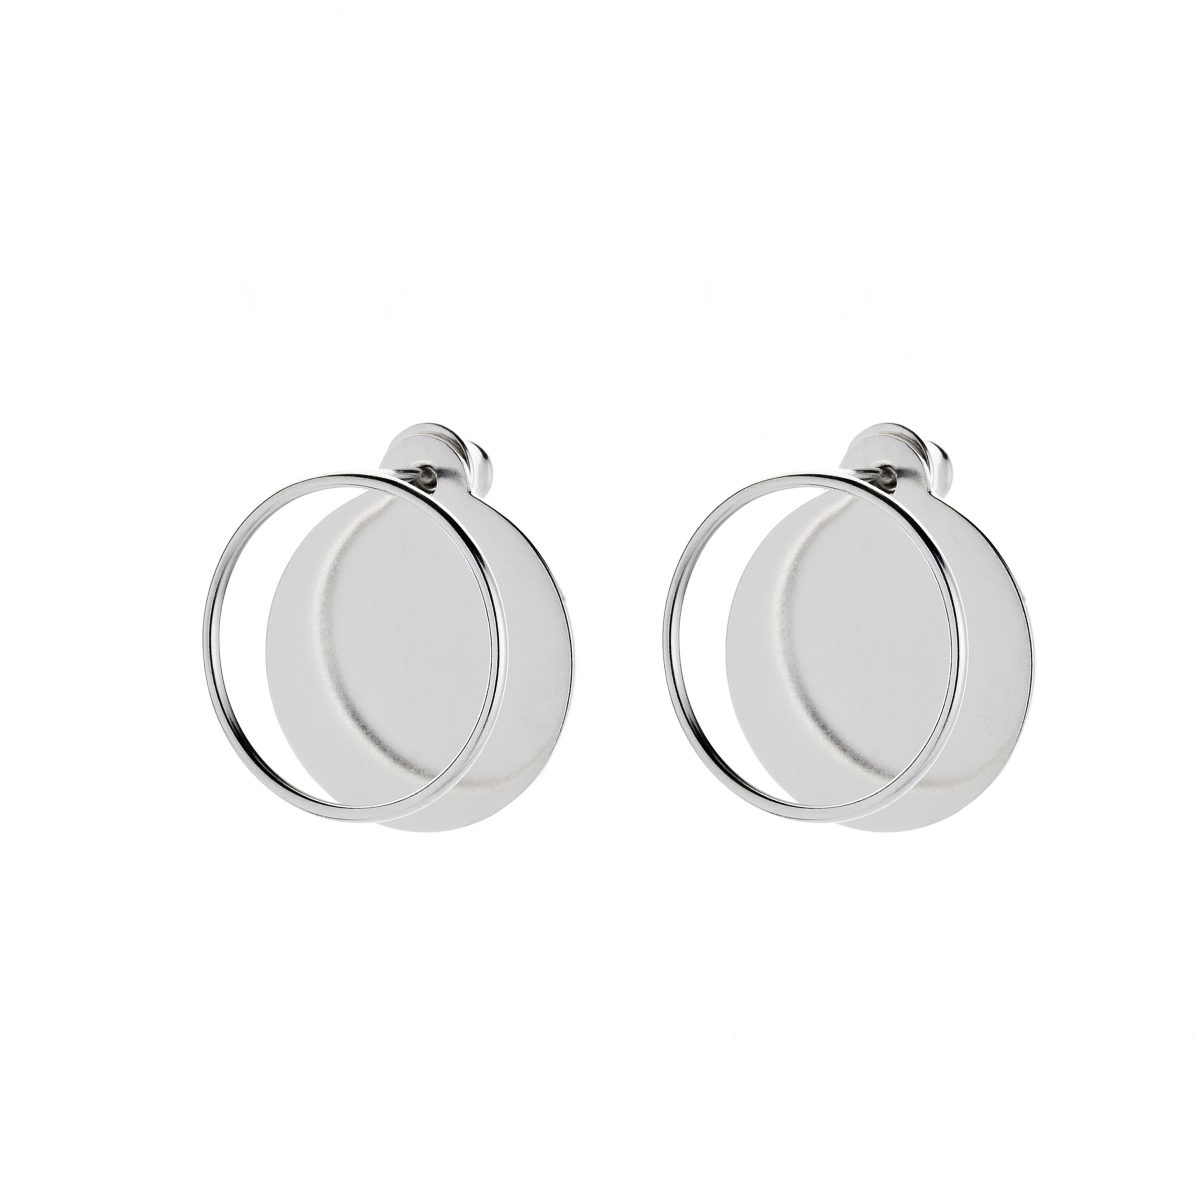 samojauskaite_jewellery_double_circle_earrings_silver_main